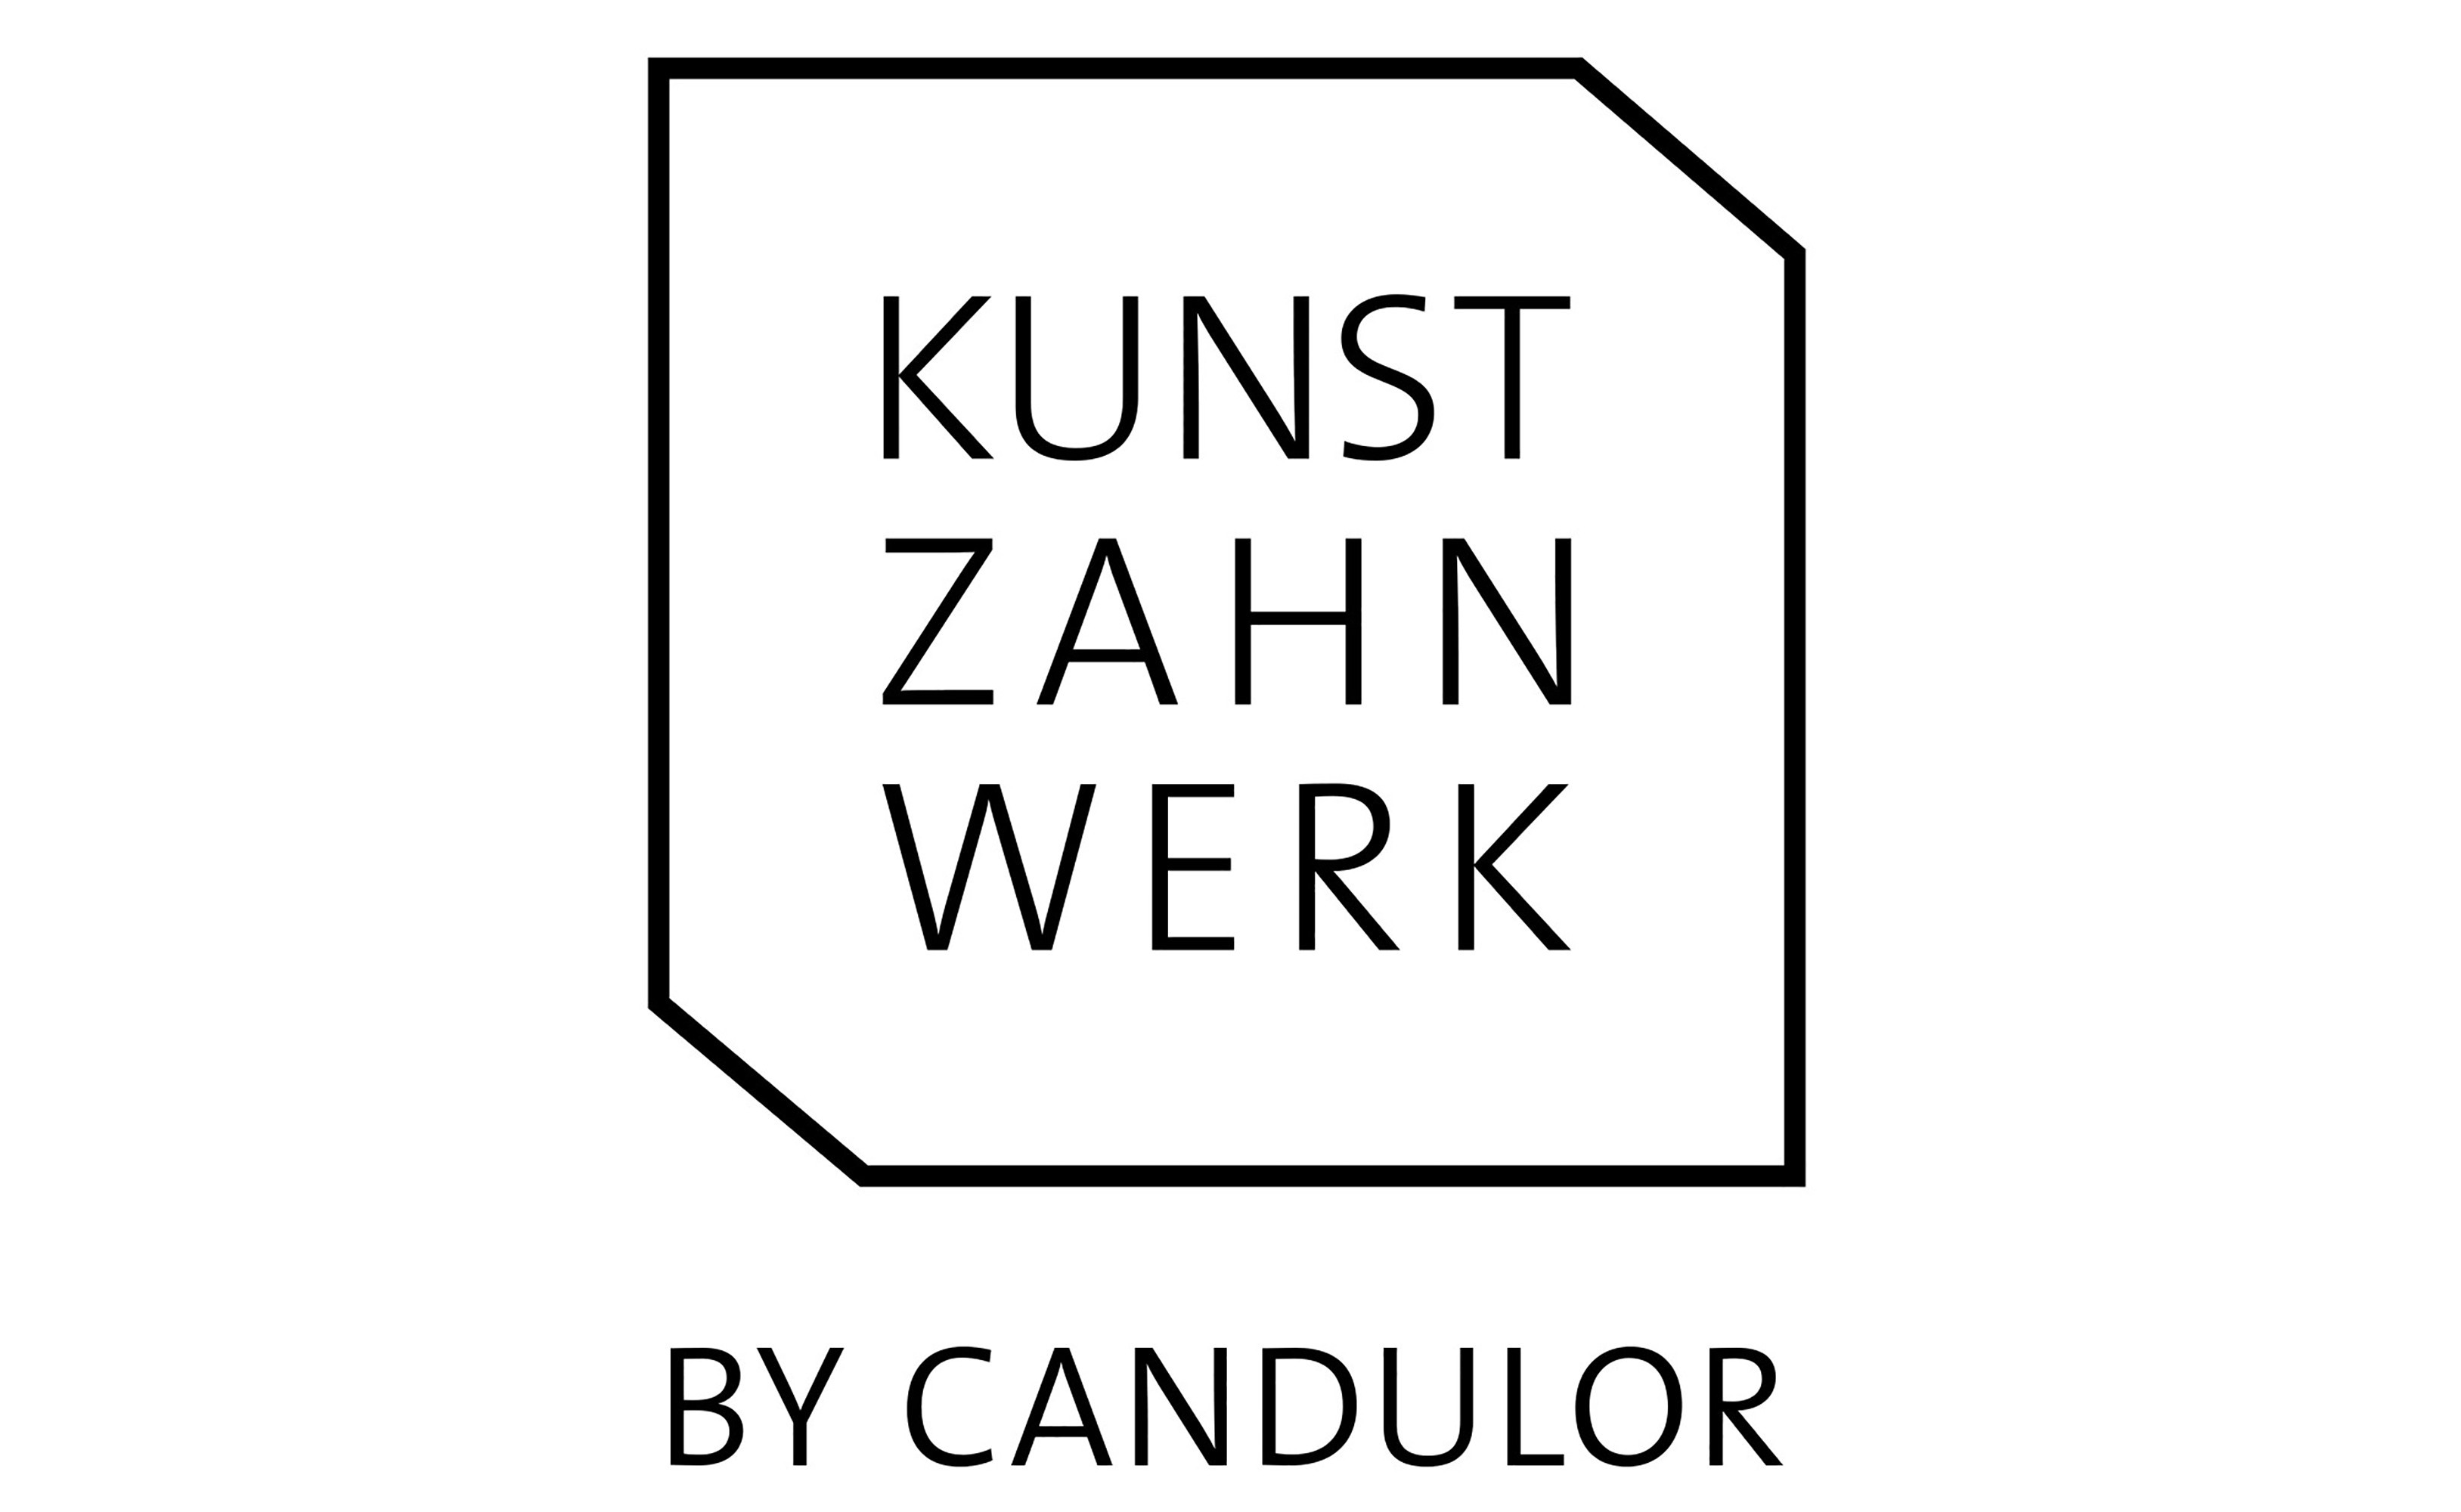 KZW by Candulor